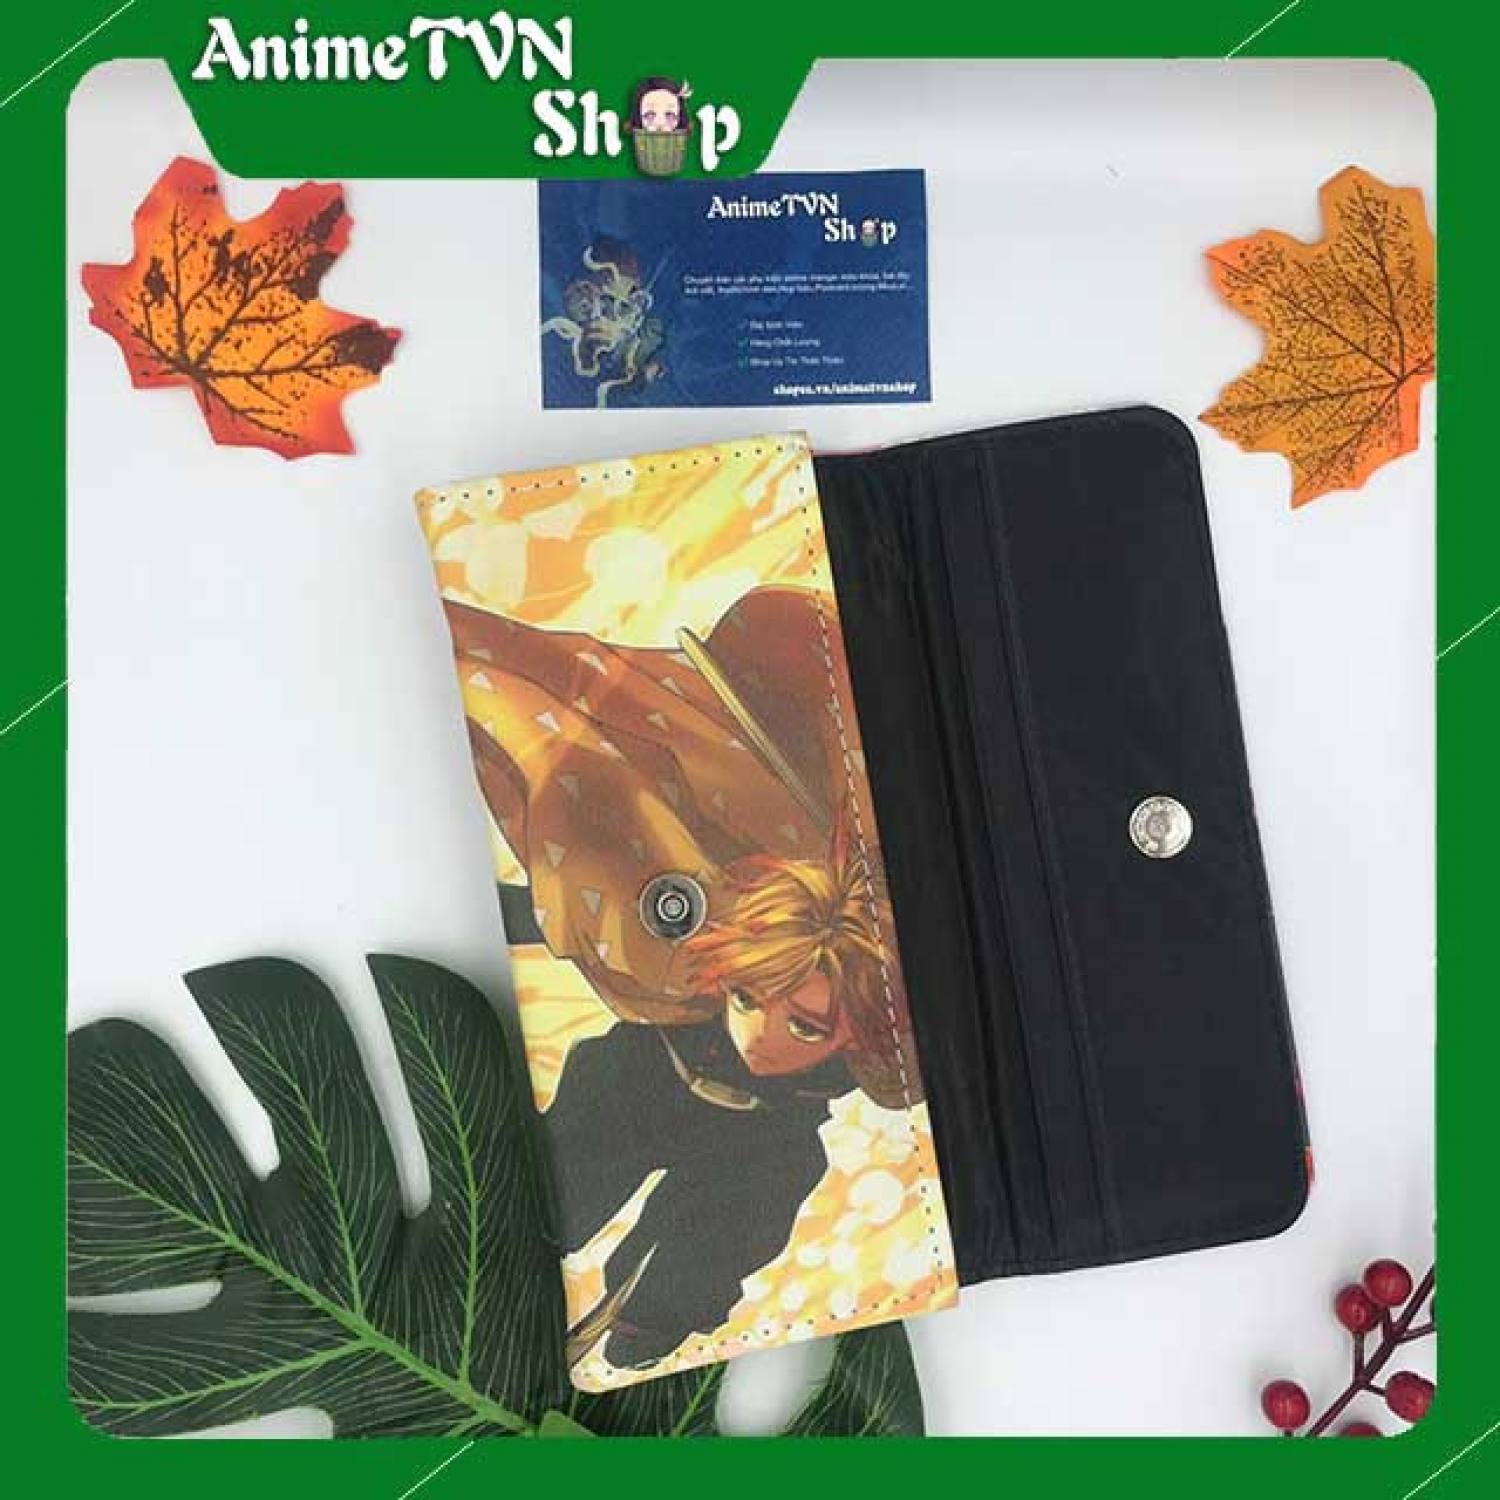 AnimeVn - Anime Vietsub HD 24/7 Apk Download for Android- Latest version  1.0.1- com.animetvn.animevsub